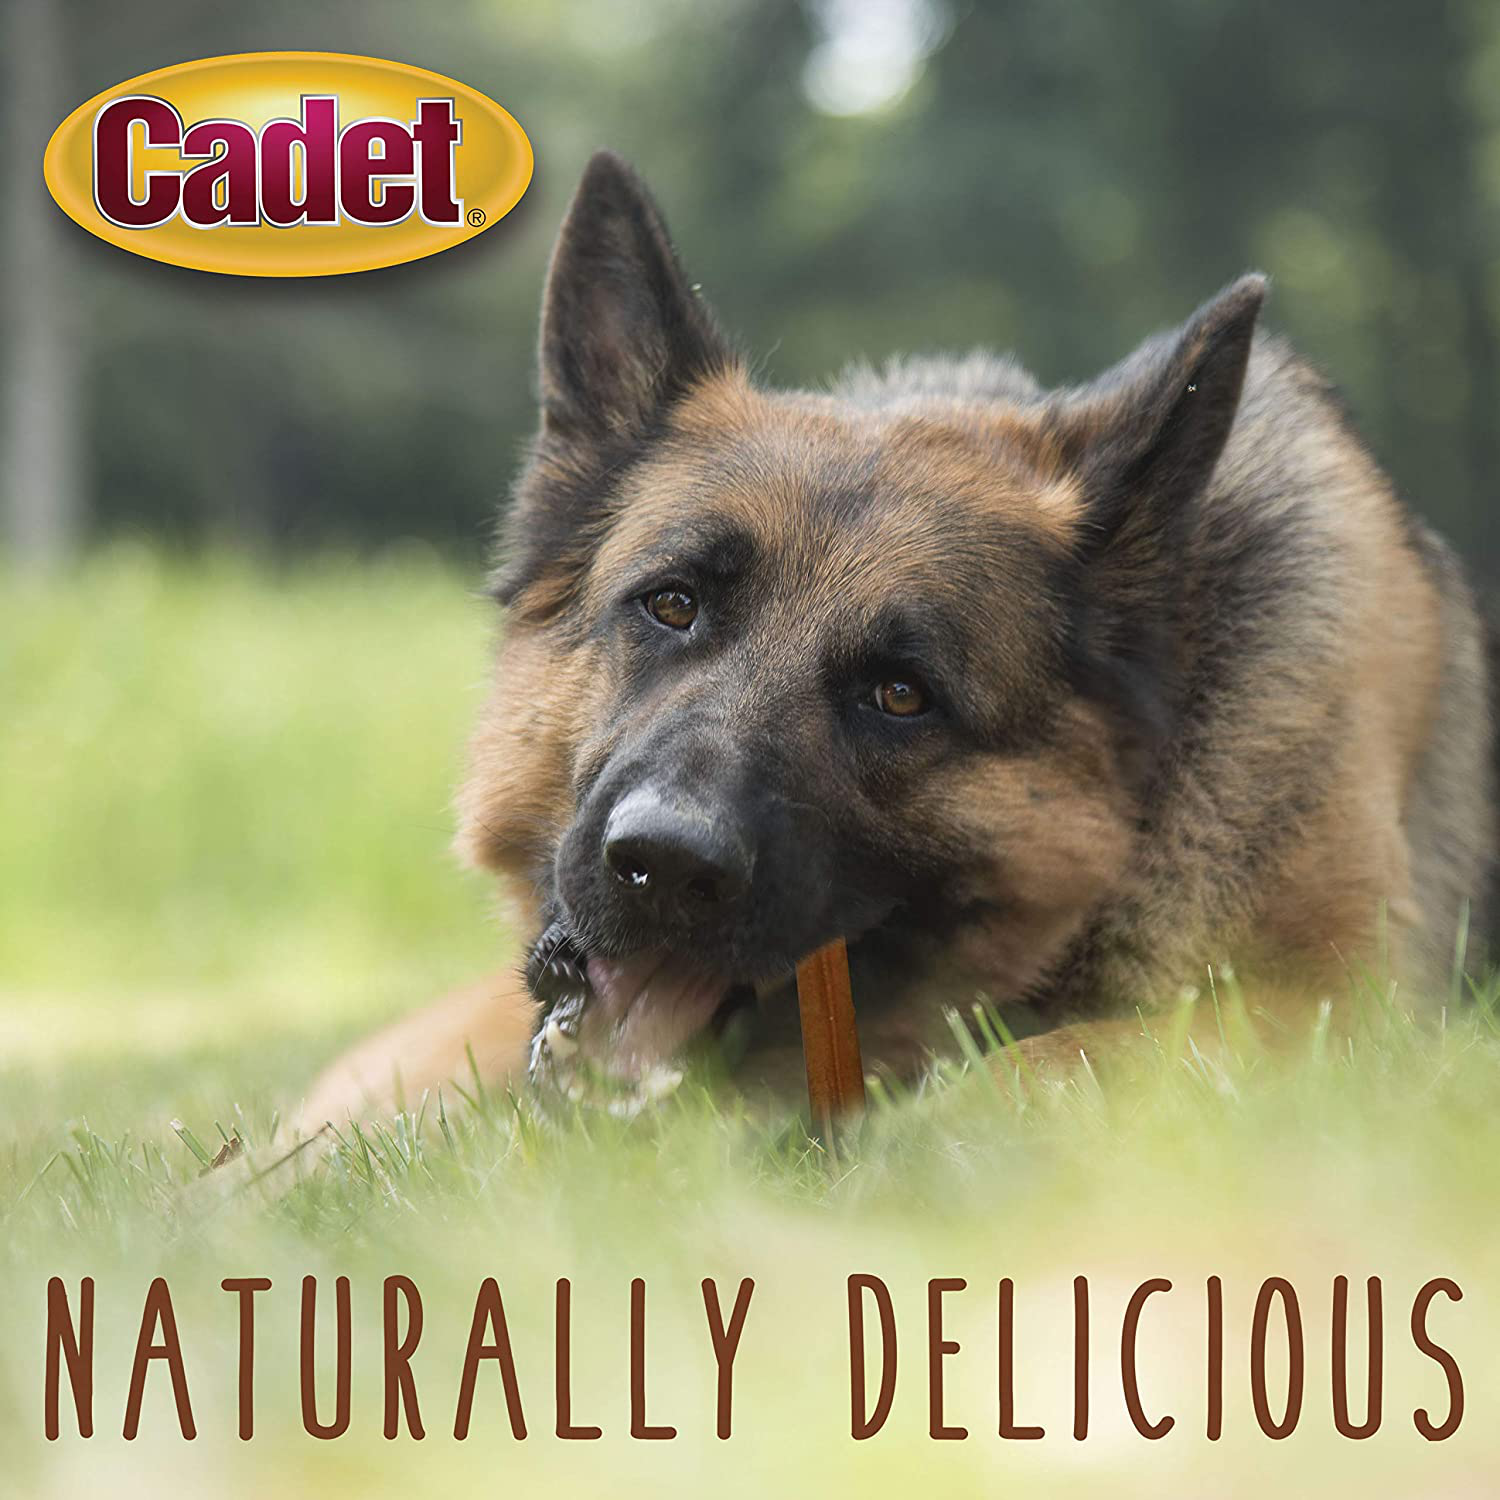 Cadet Bully Sticks Dog Treats| Promotes Dental Health All-Natural Premium Dog Chew L Natural Bully Sticks | Grain-Free, Single-Ingredient, 100% Beef Dog Treat